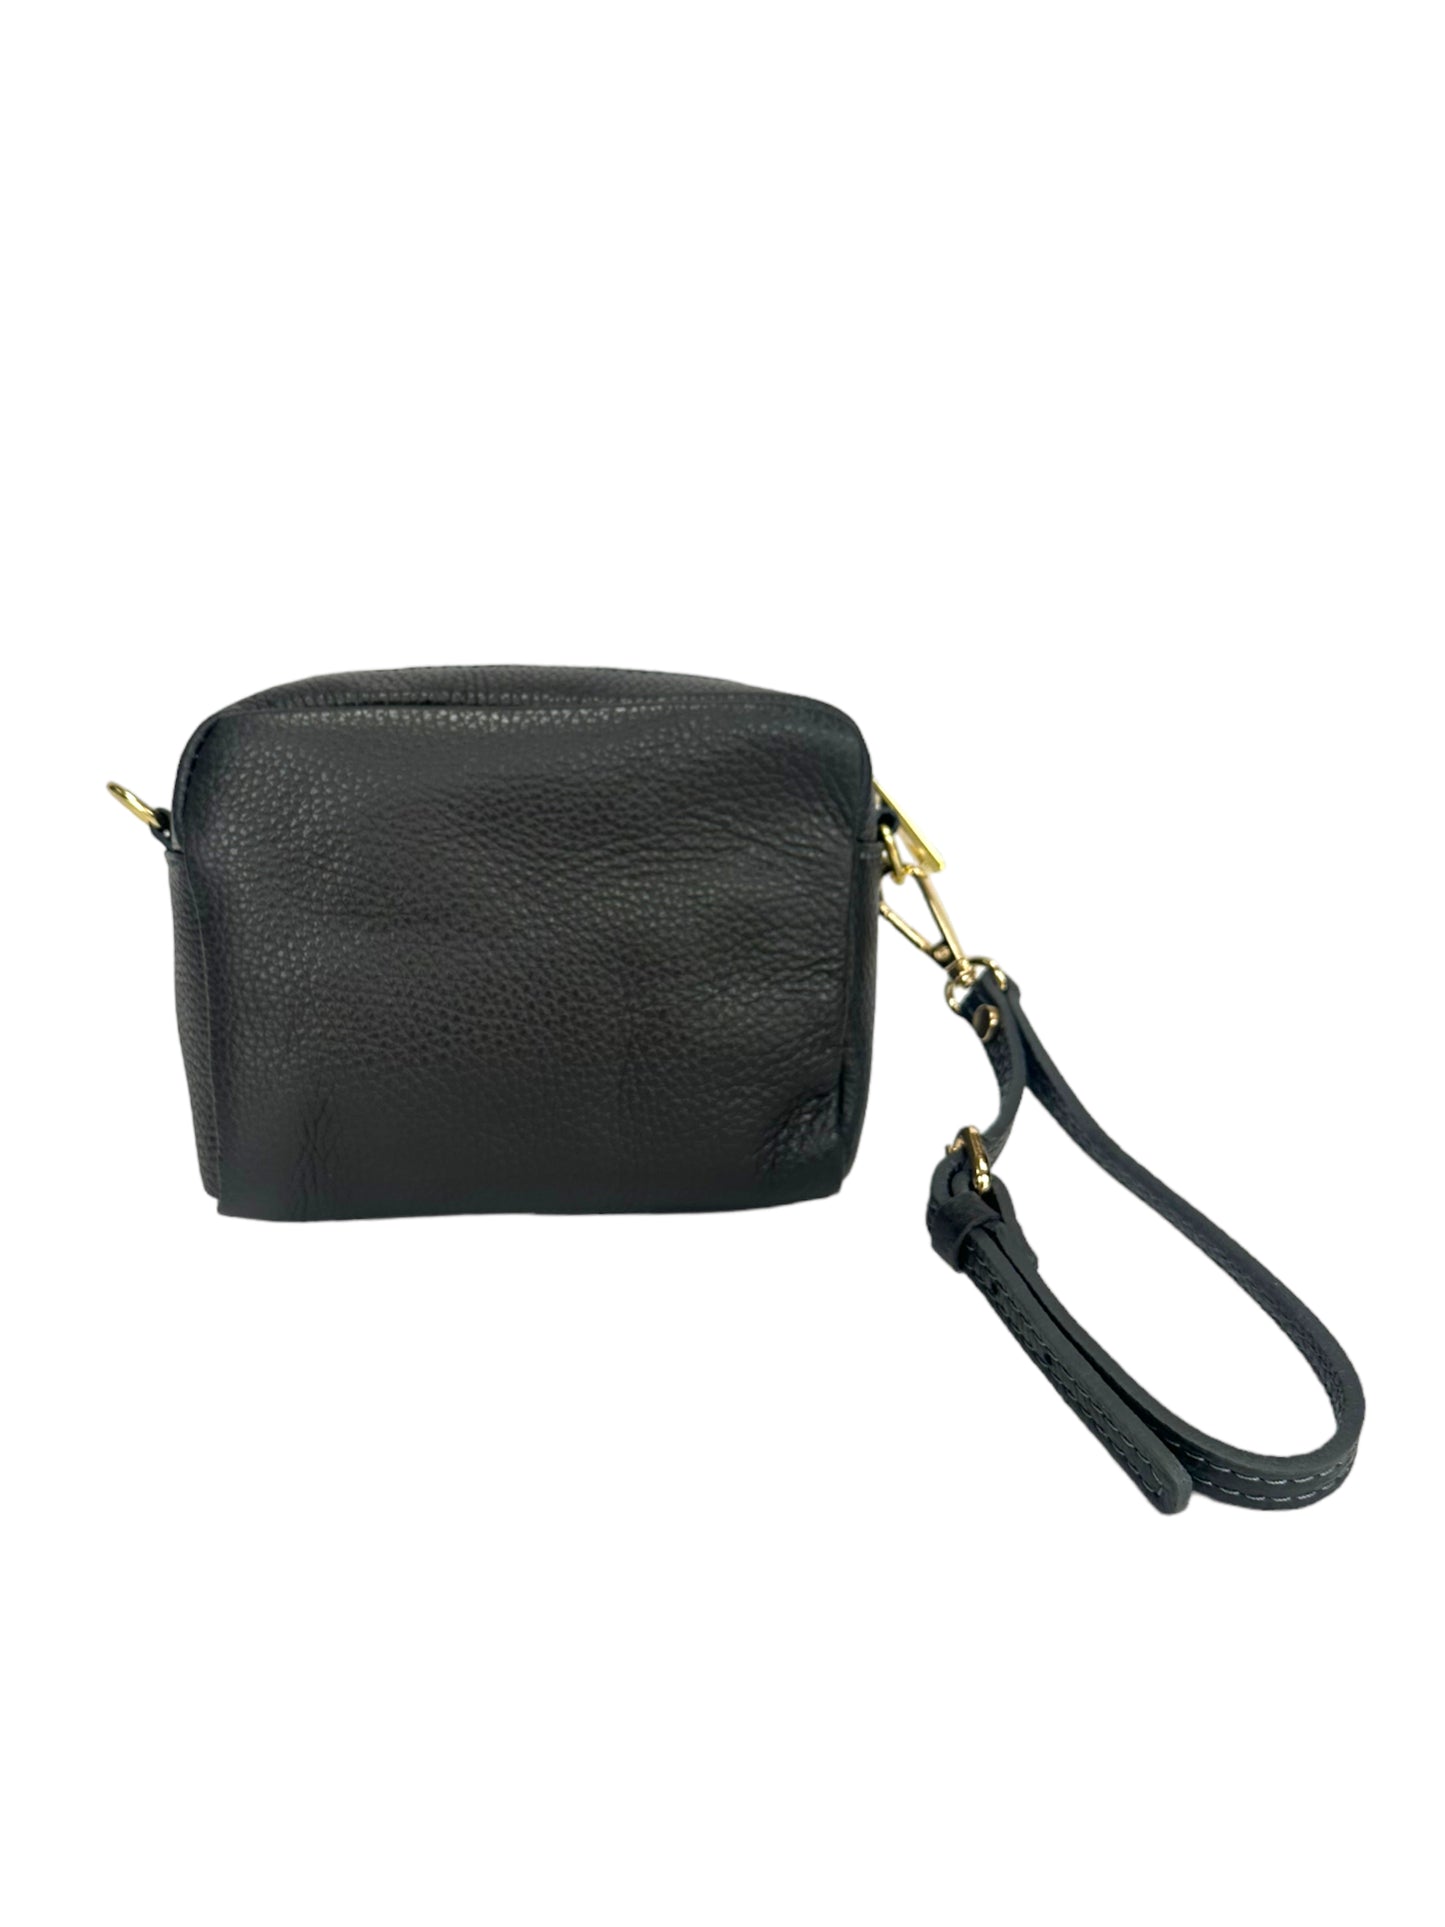 Luna Small Leather Wrist/ Crossbody bag